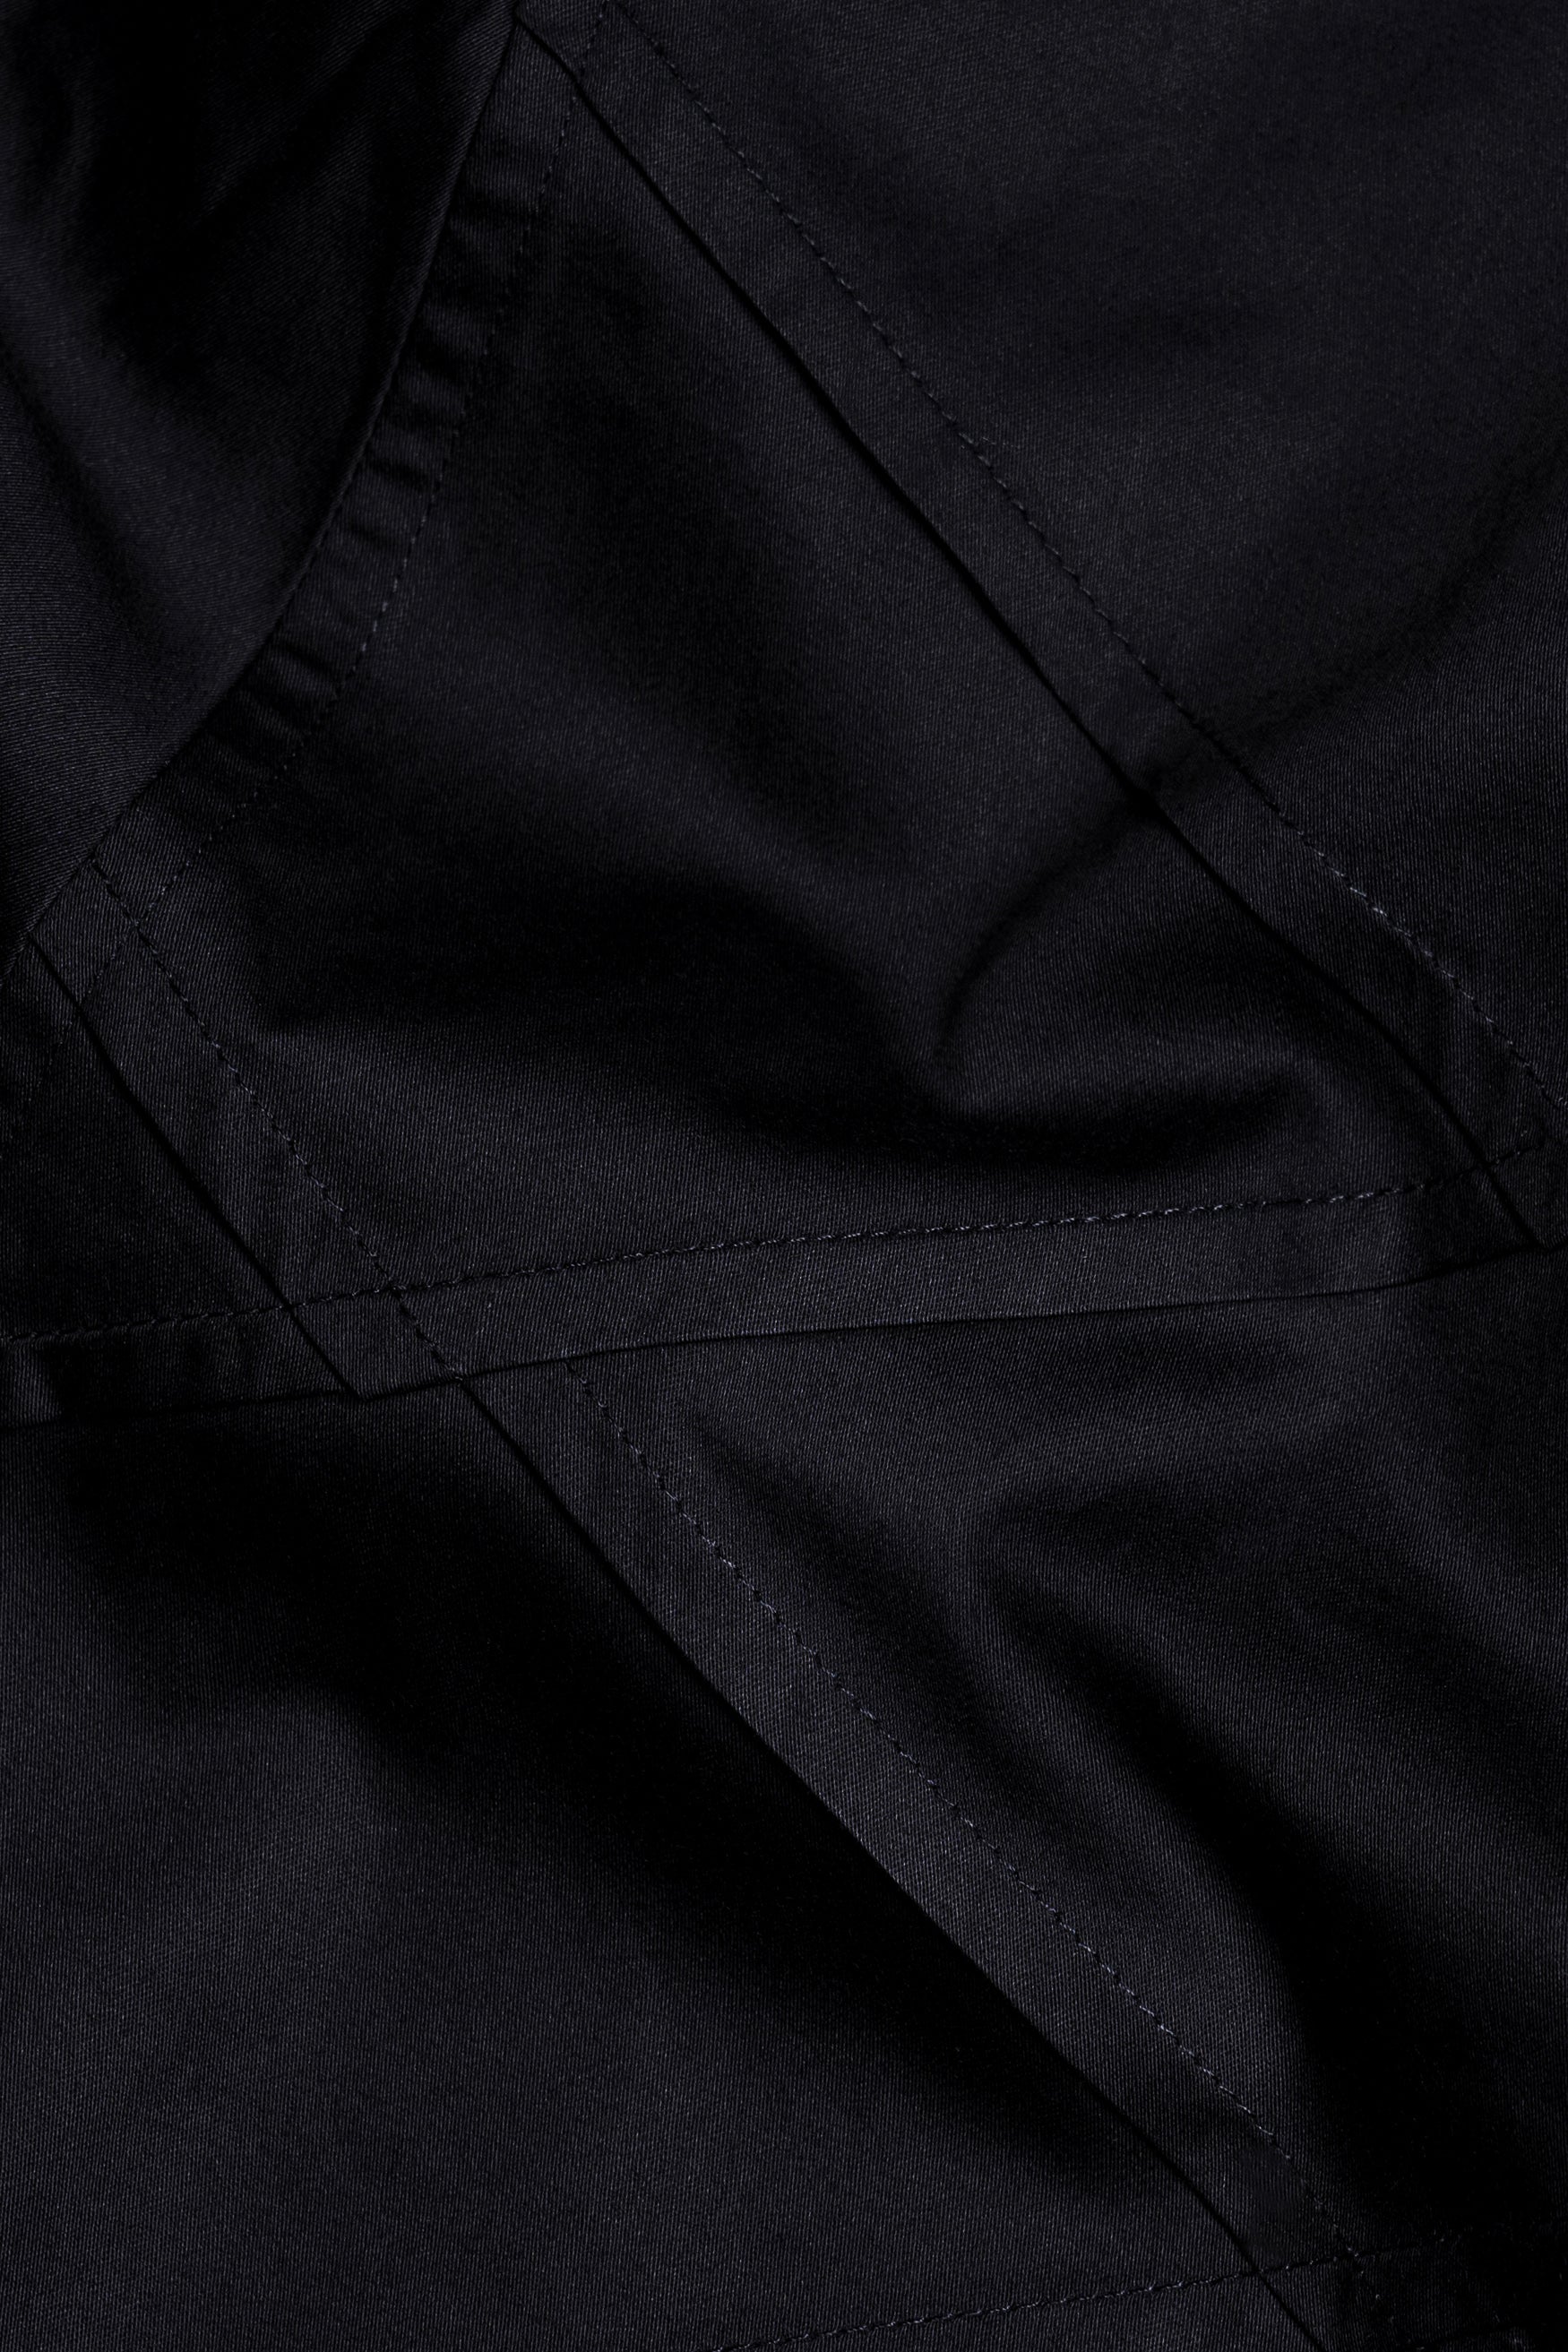 Jade Black Cross Tucks Subtle Sheen Super Soft Premium Cotton Designer Shirt